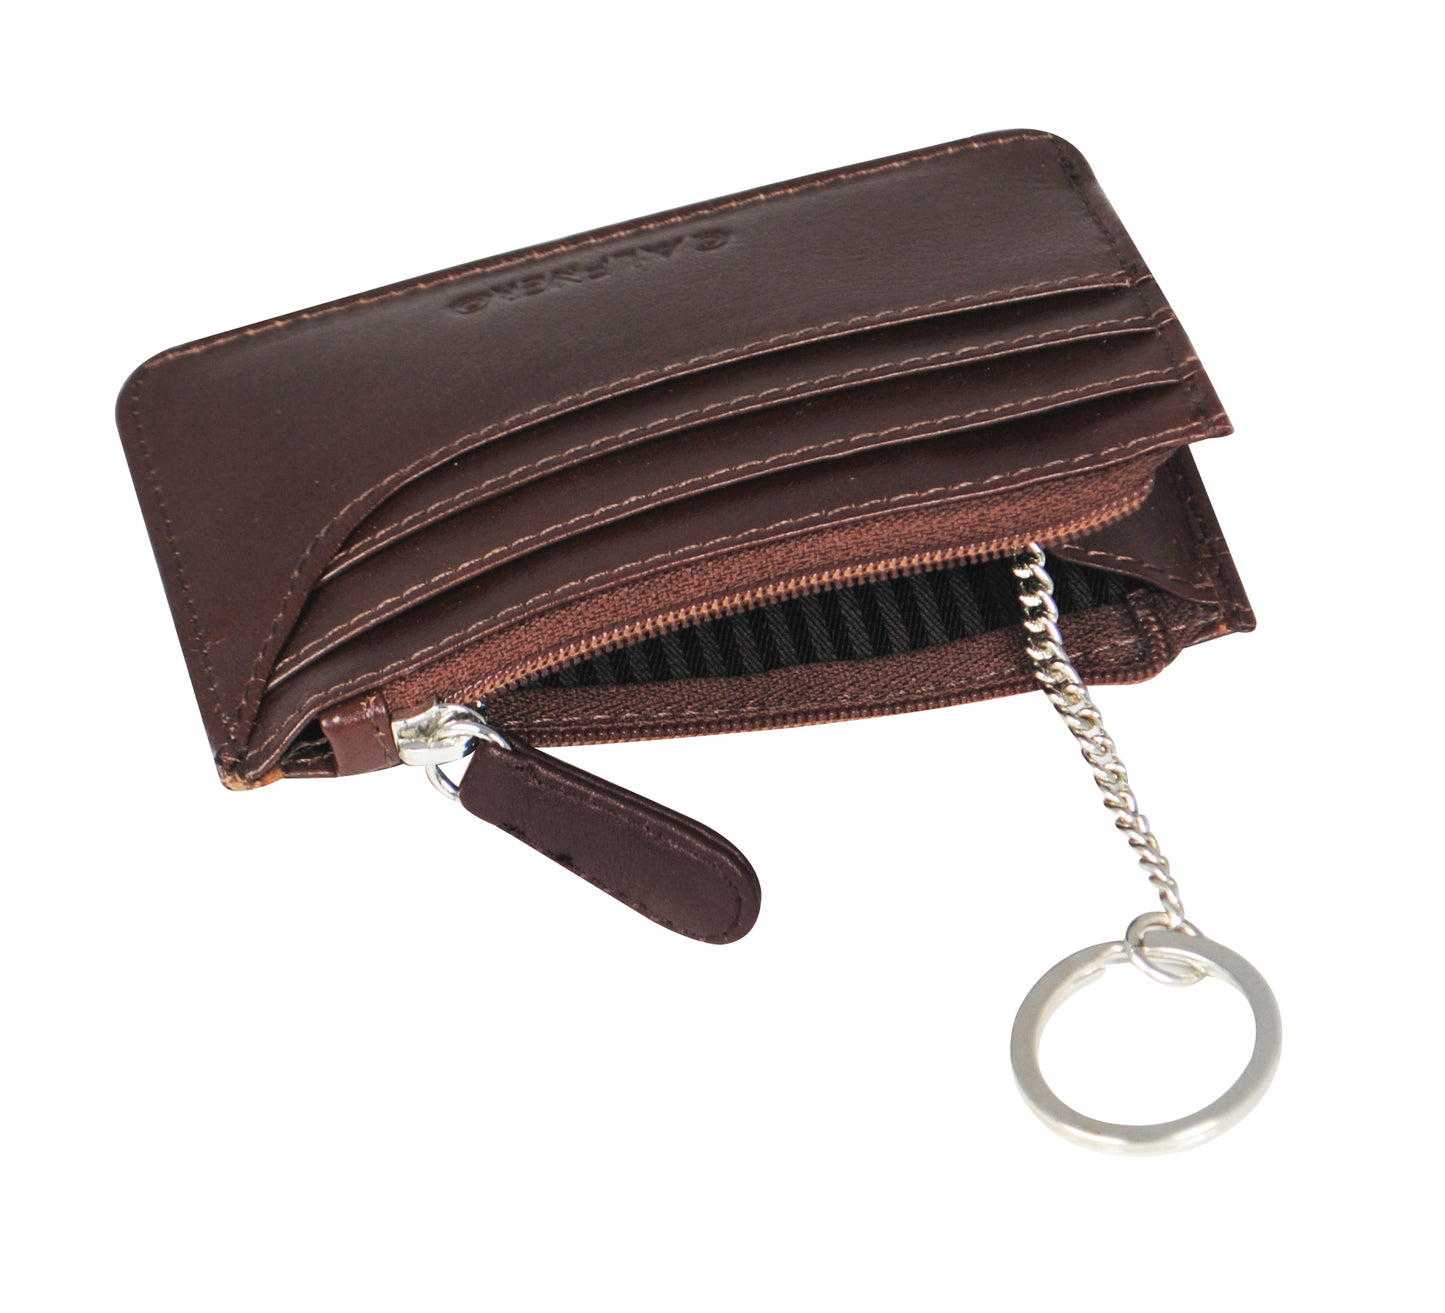 Calfnero Genuine Leather Card Case Wallet (70760-Brown)